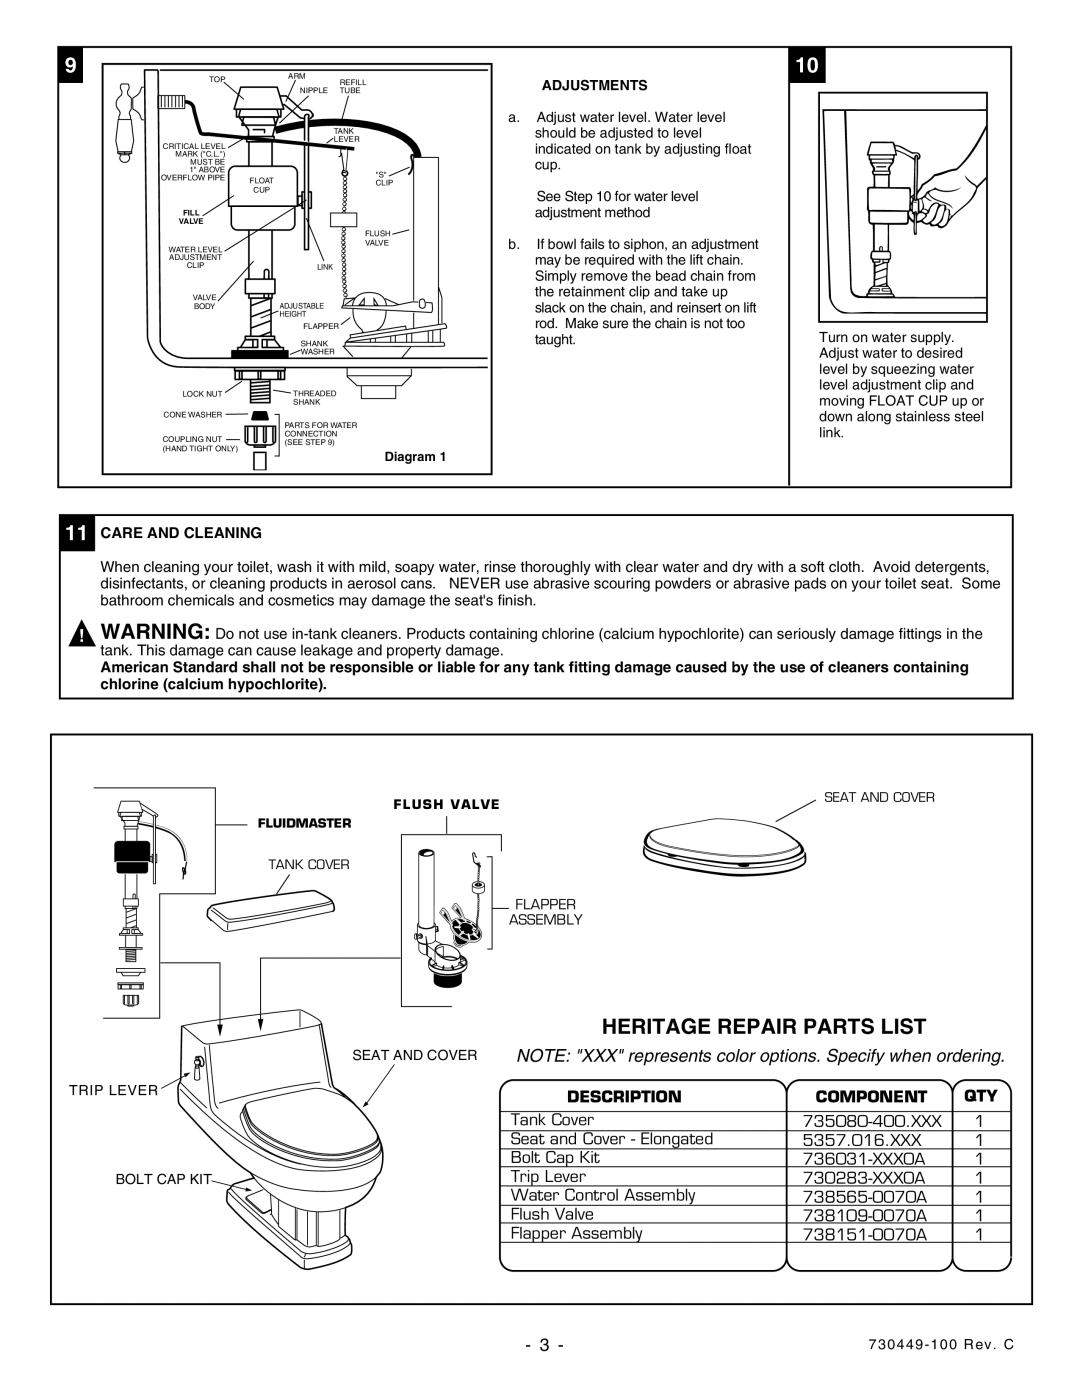 American Standard 2071.016 installation instructions Heritage Repair Parts List, Description, Component 